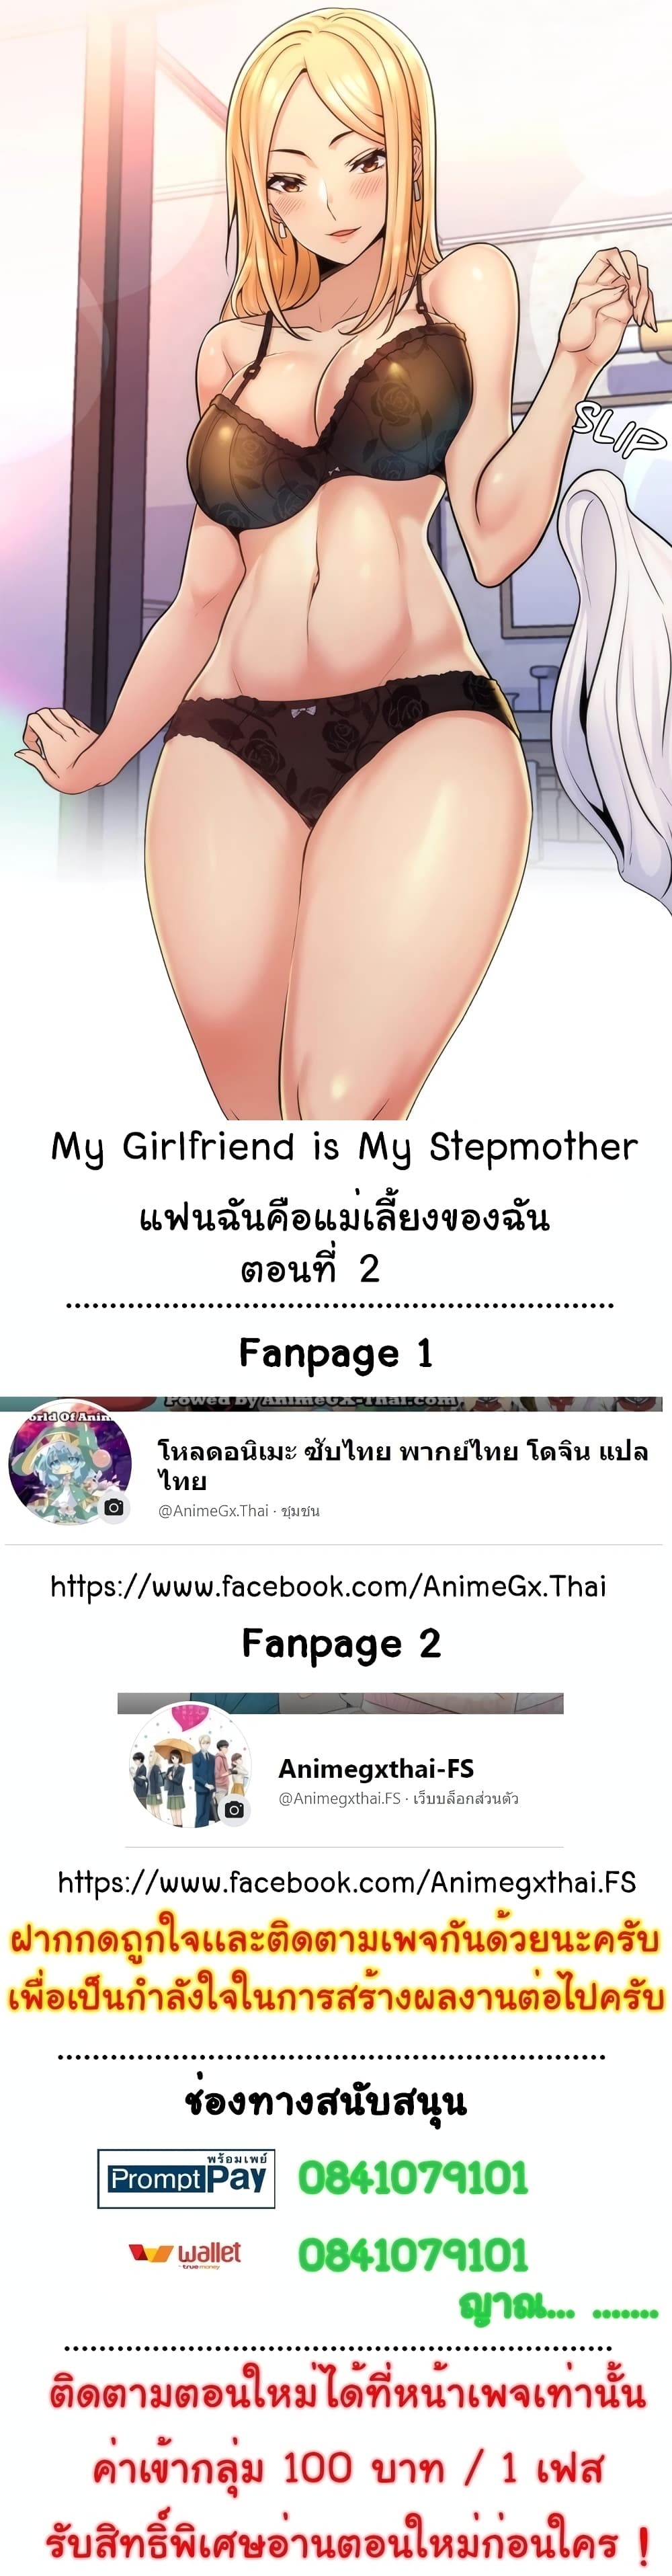 My Girlfriend is My Stepmother 2 (1)